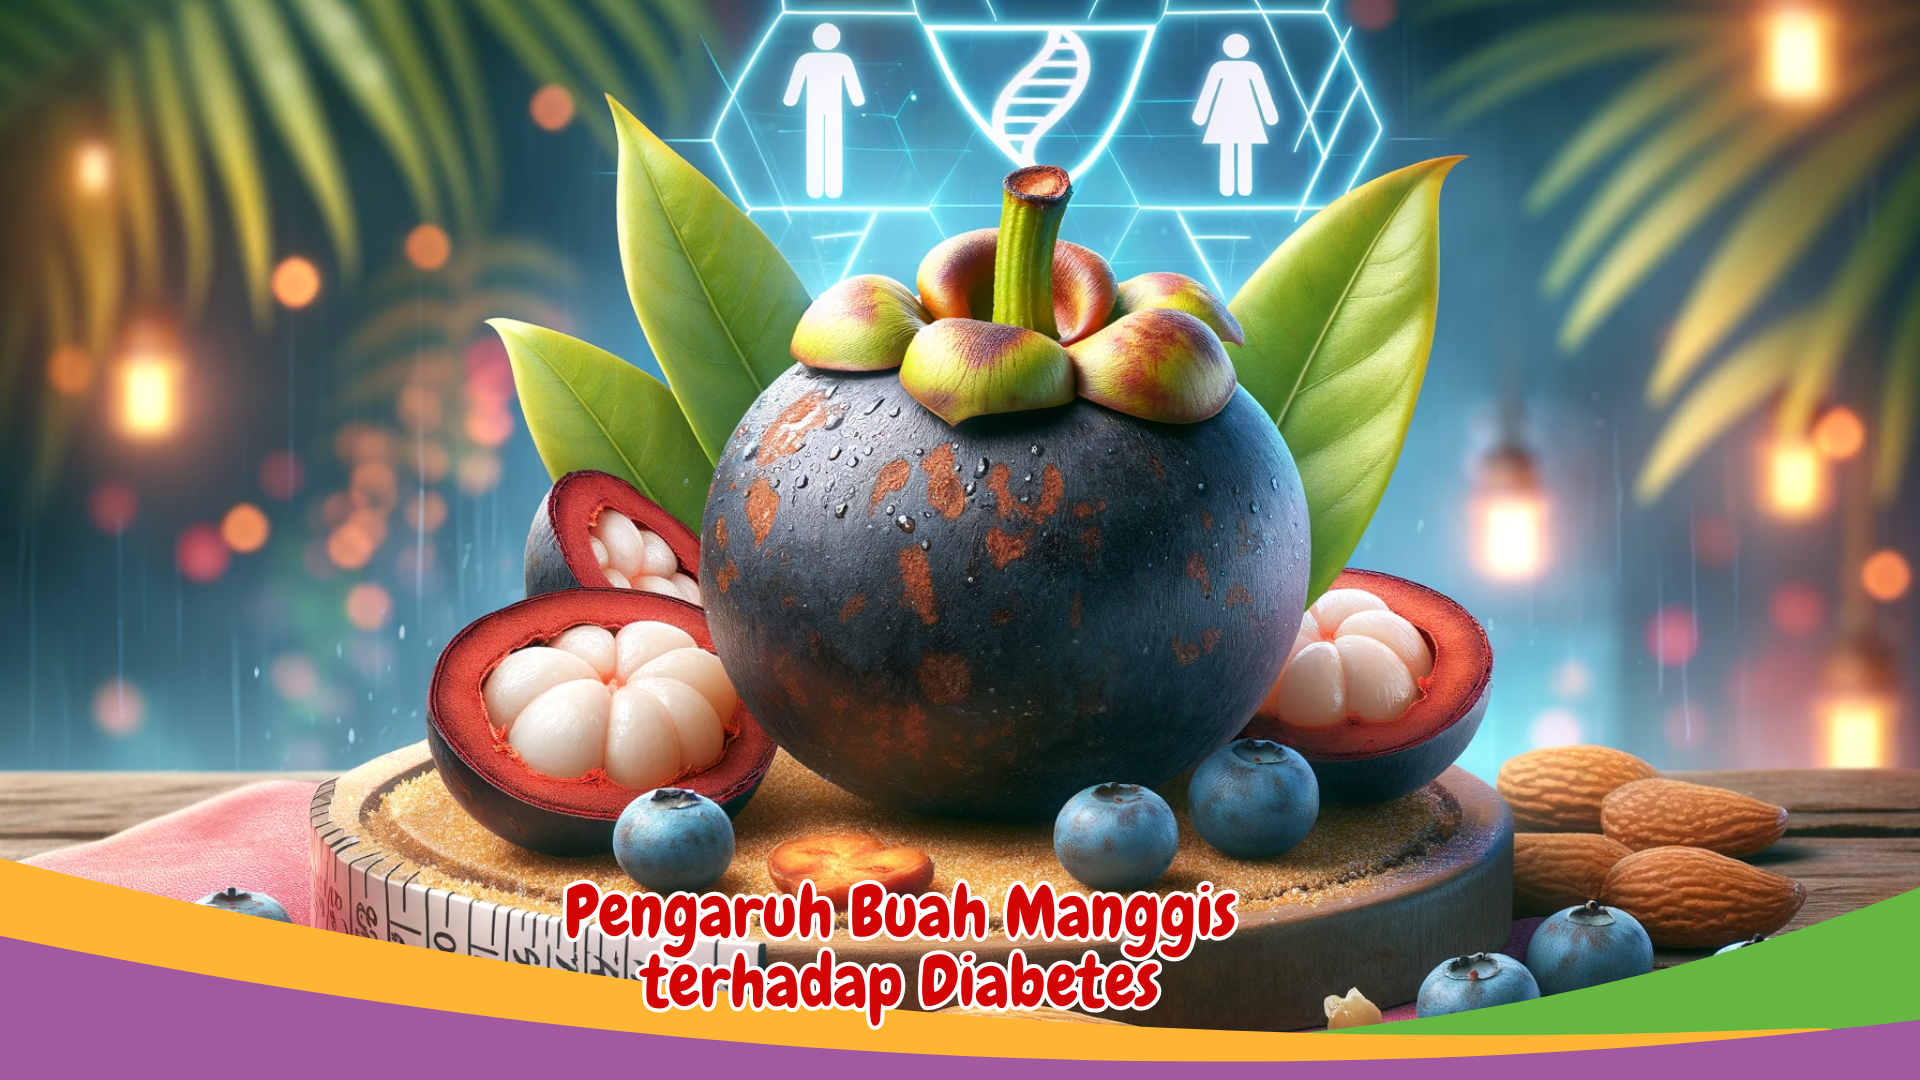 Pengaruh Buah Manggis terhadap Diabetes